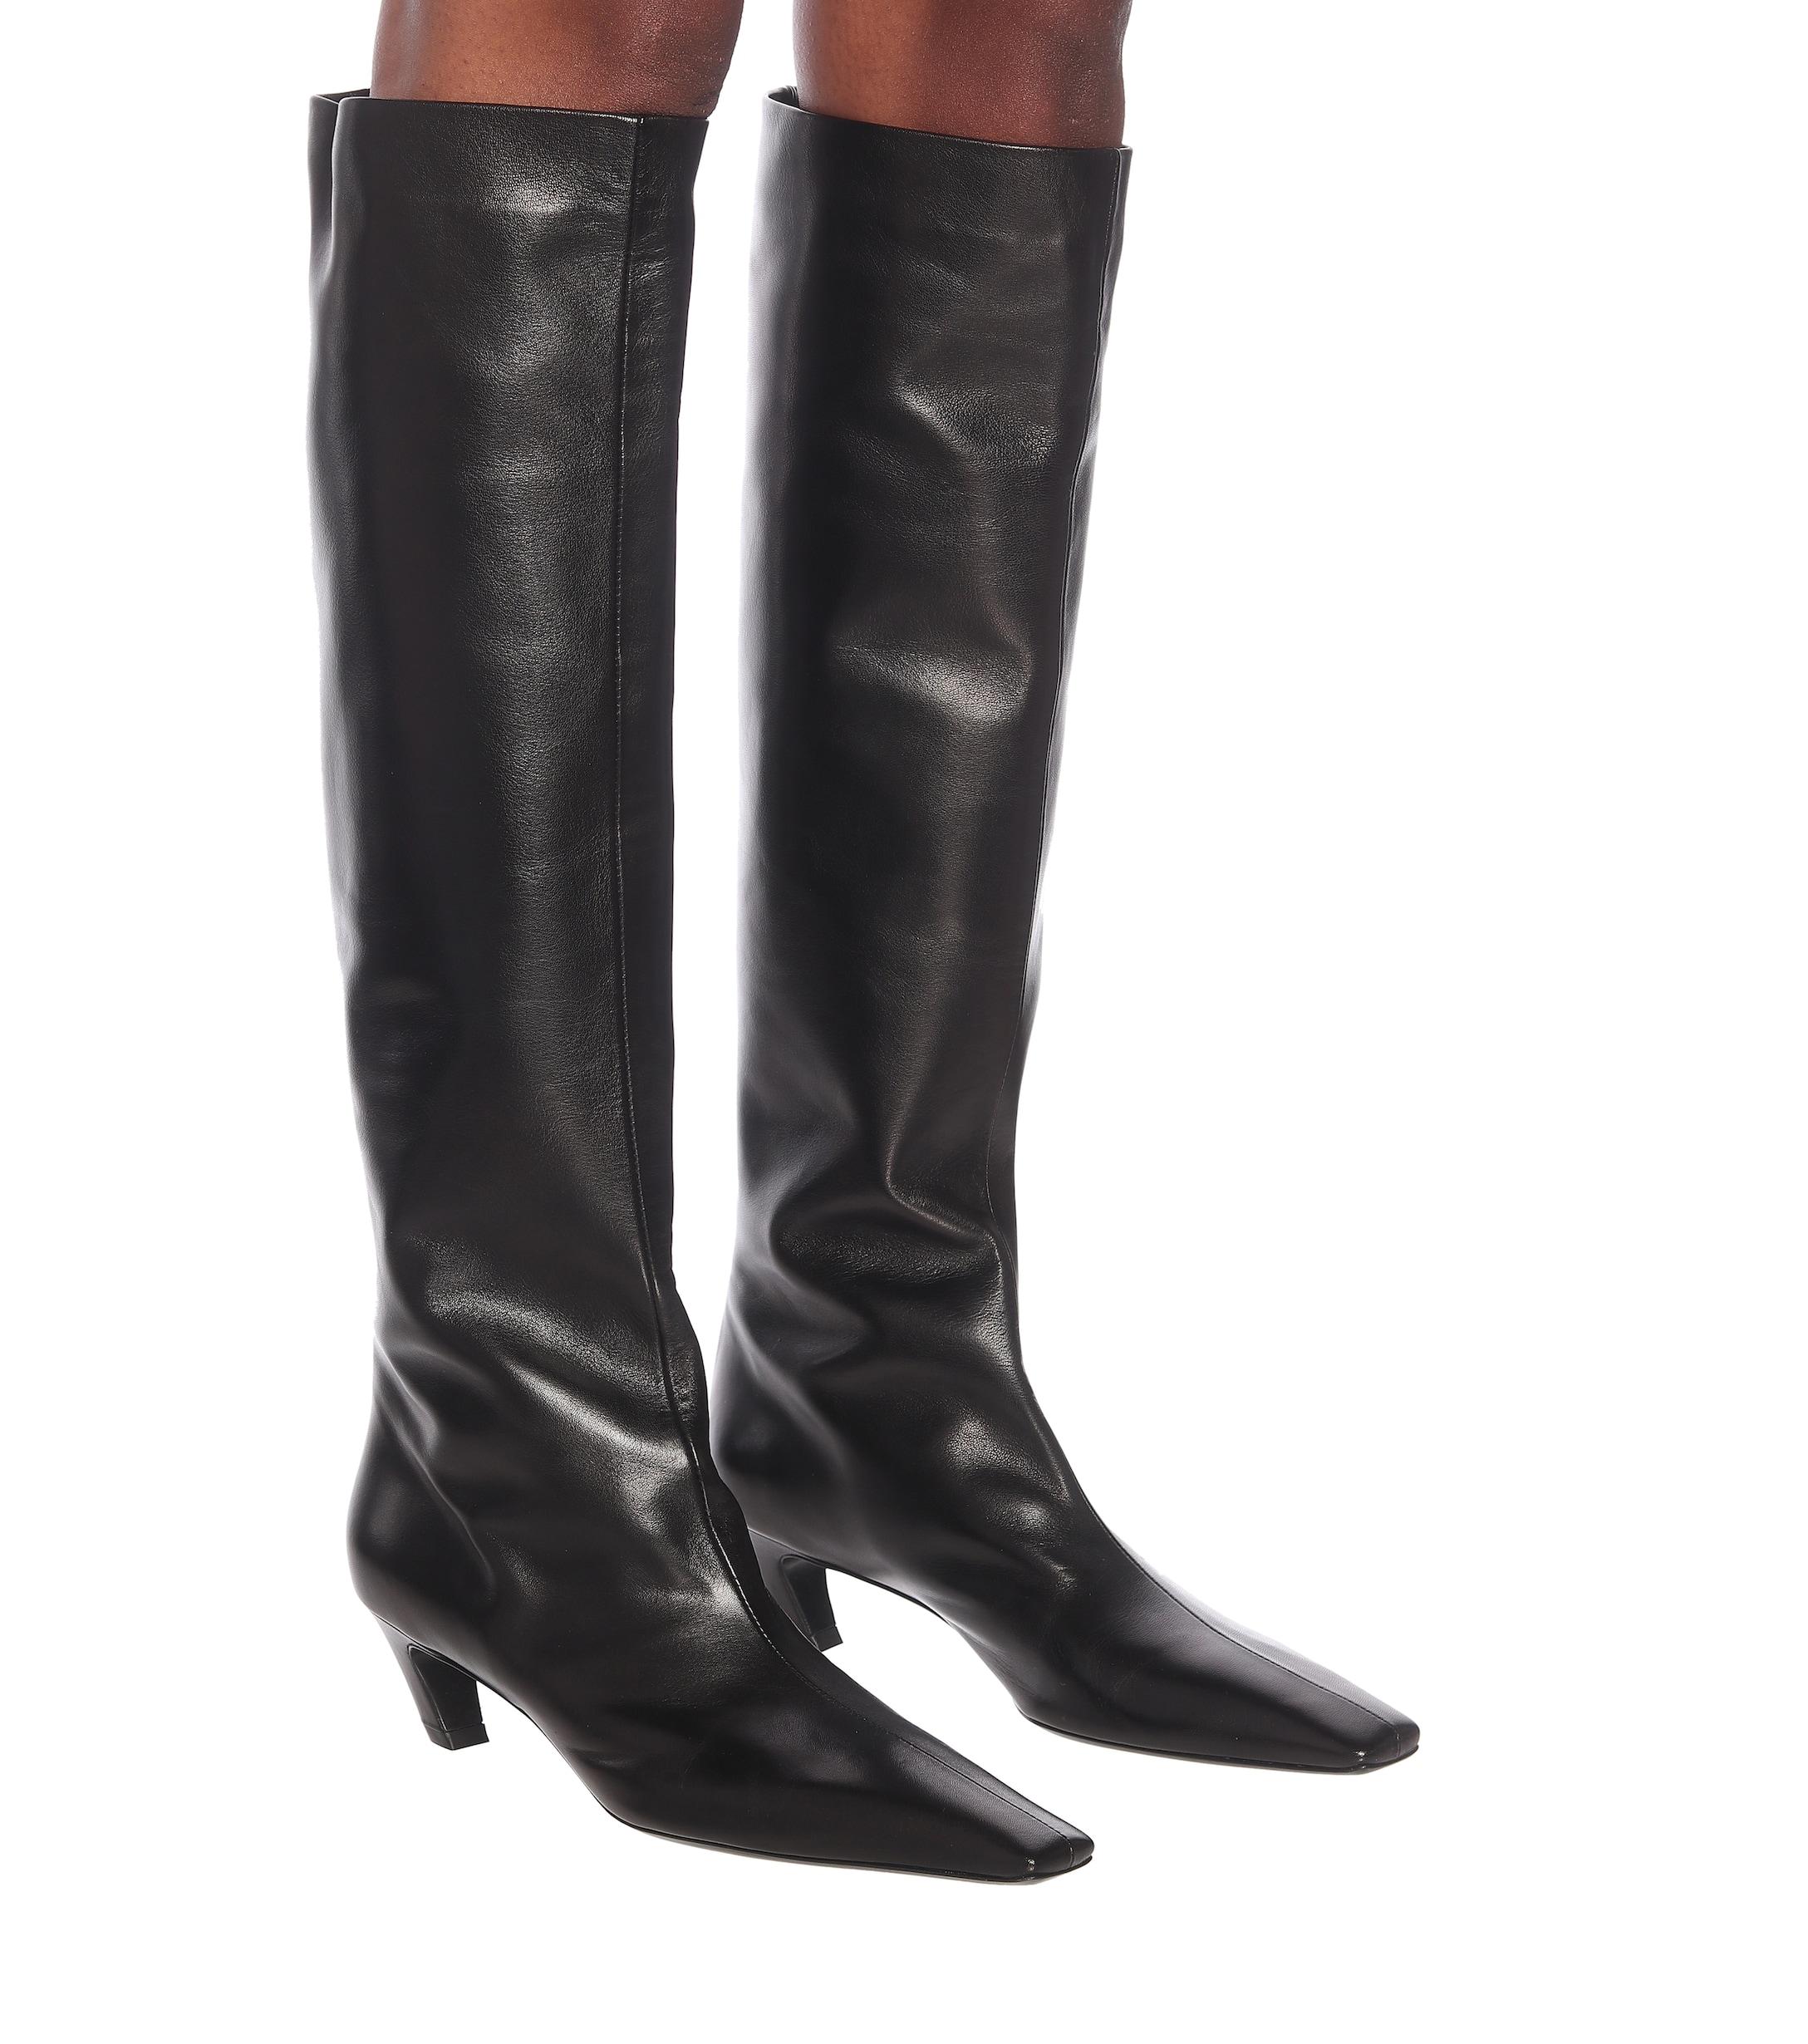 Khaite Davis Leather Knee-high Boots in Black - Lyst